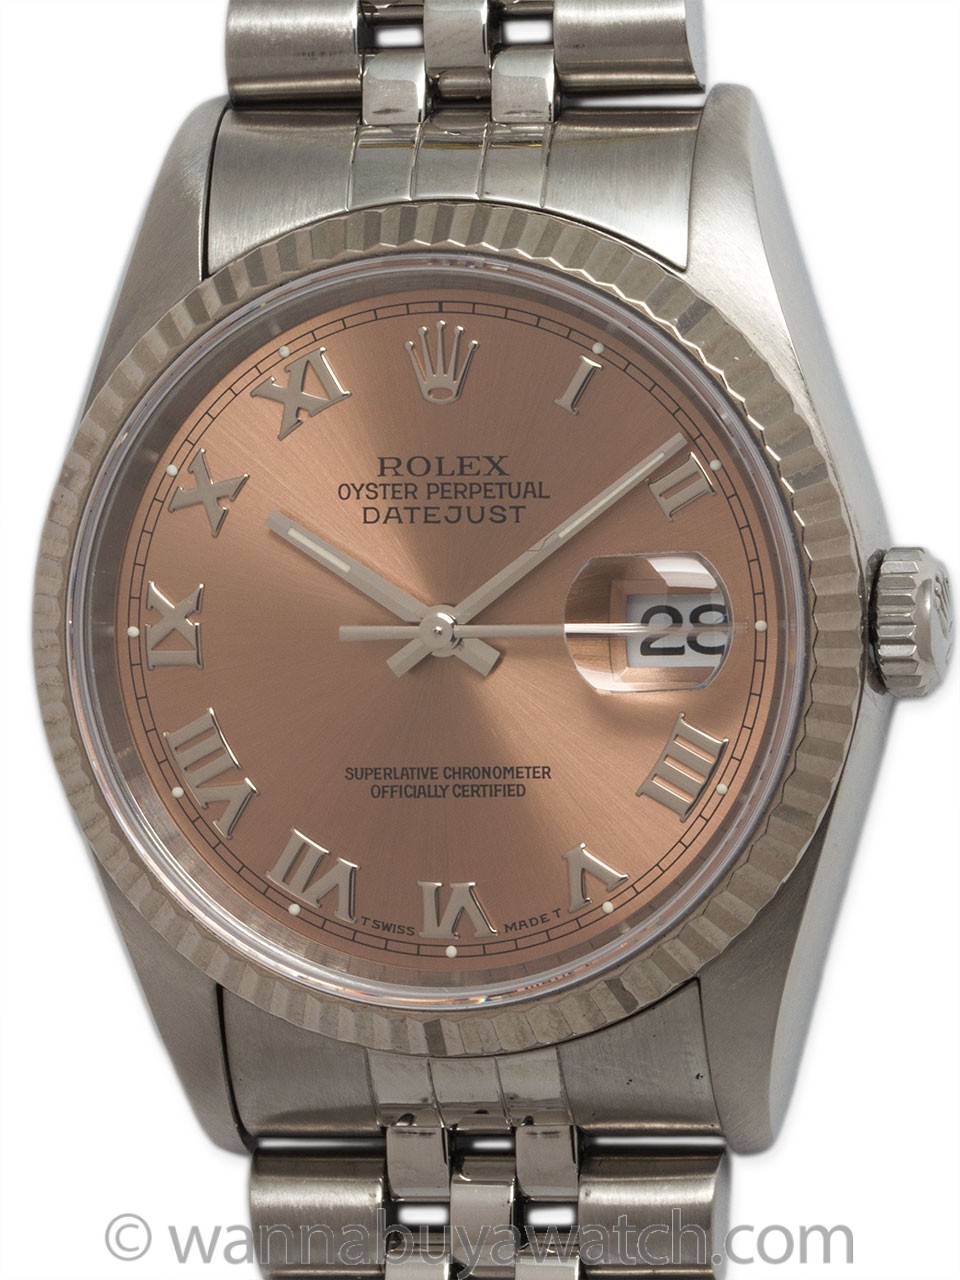 Rolex SS Datejust ref 16014 circa 1995